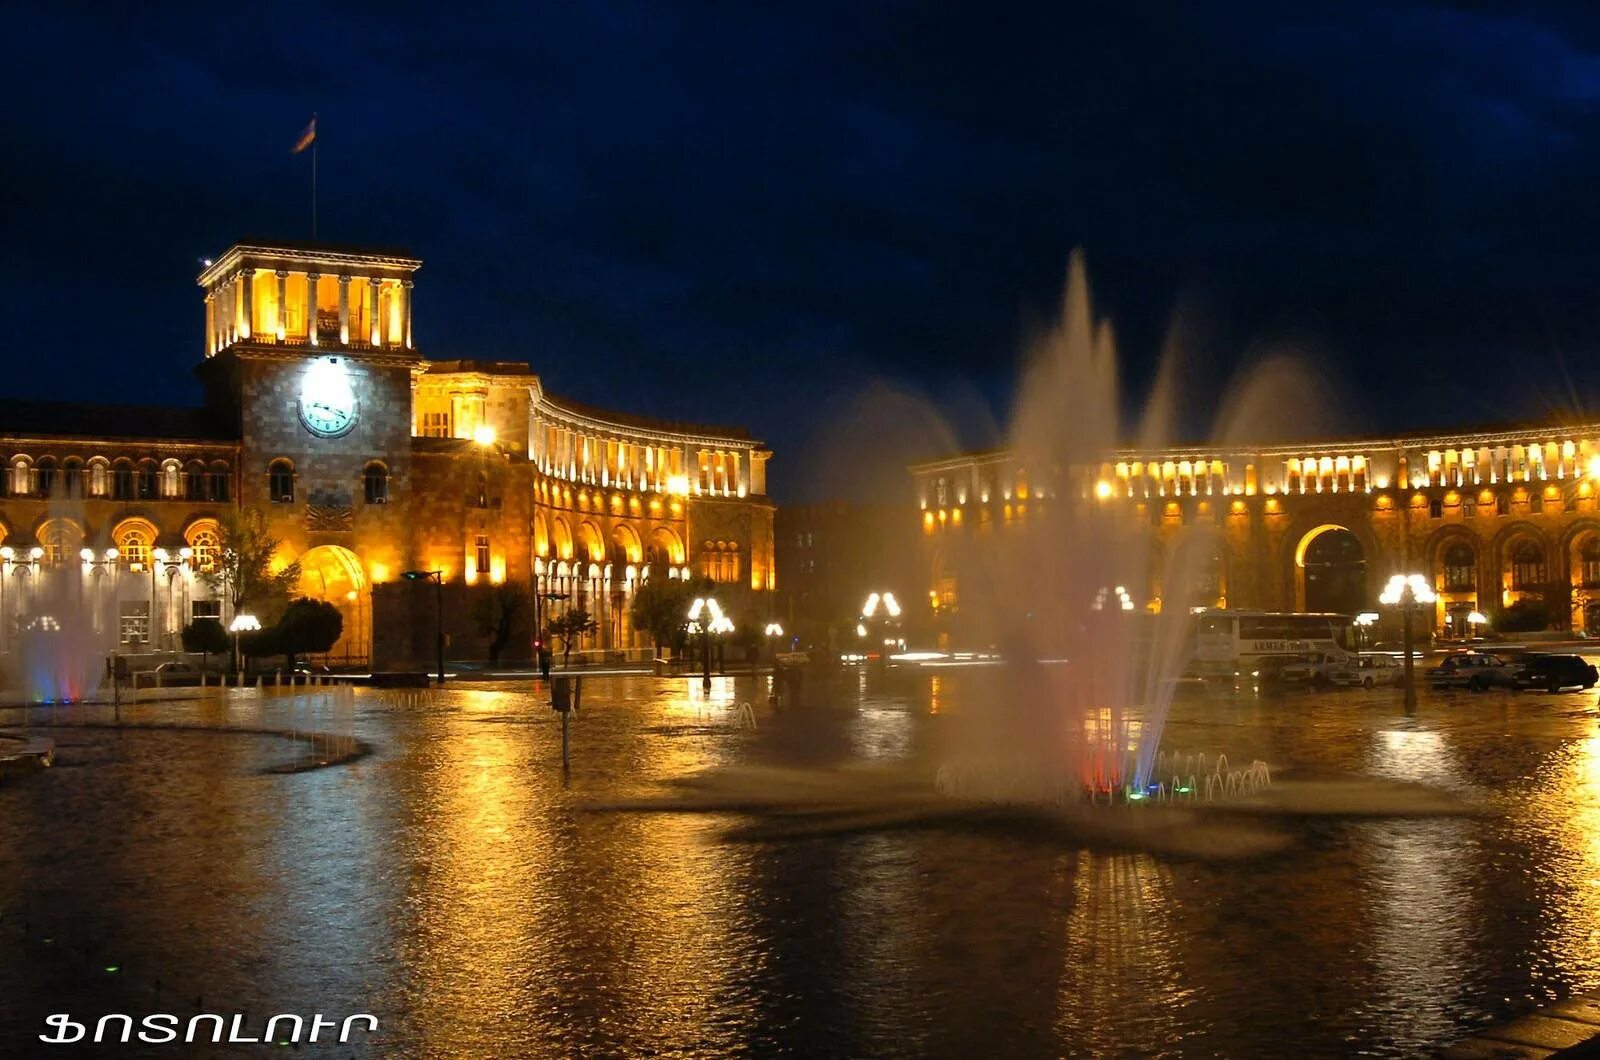 Услуги ереван. Площадь Республики Ереван. Столица Армении Ереван. Площадь независимости Ереван. Площадь революции Ереван.